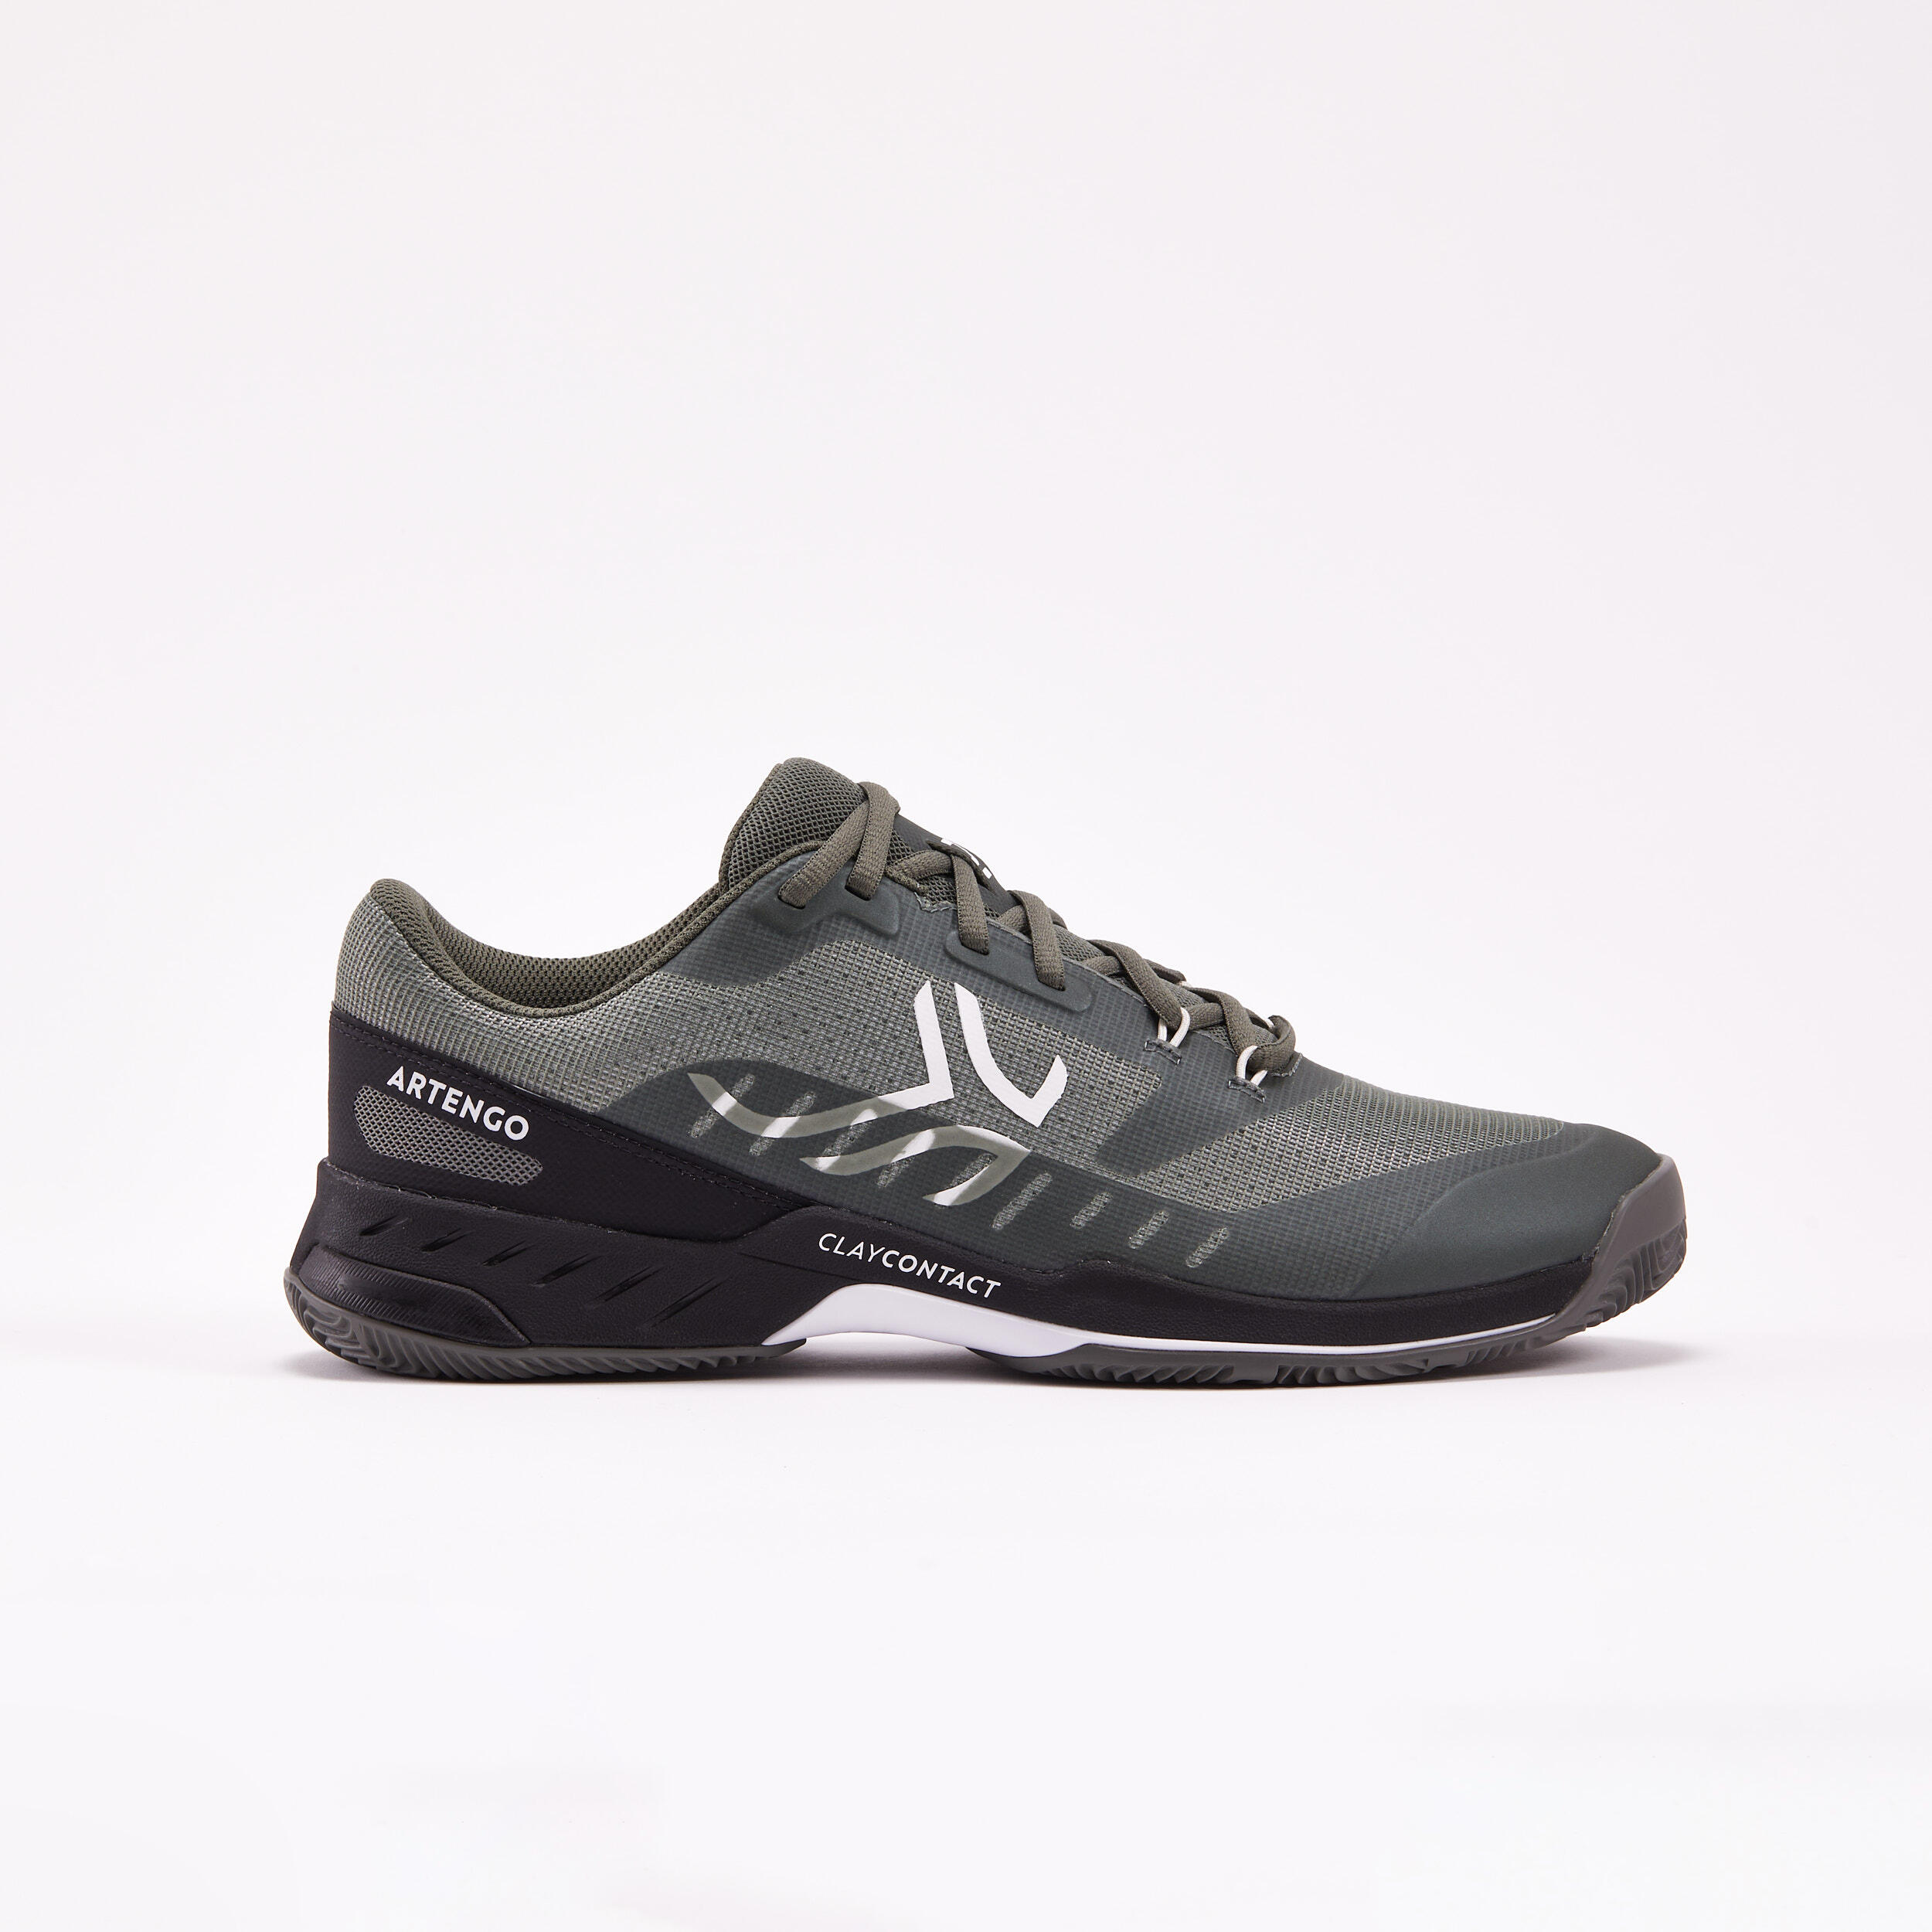 ARTENGO Men's Clay Court Tennis Shoes Fast - Khaki/Black